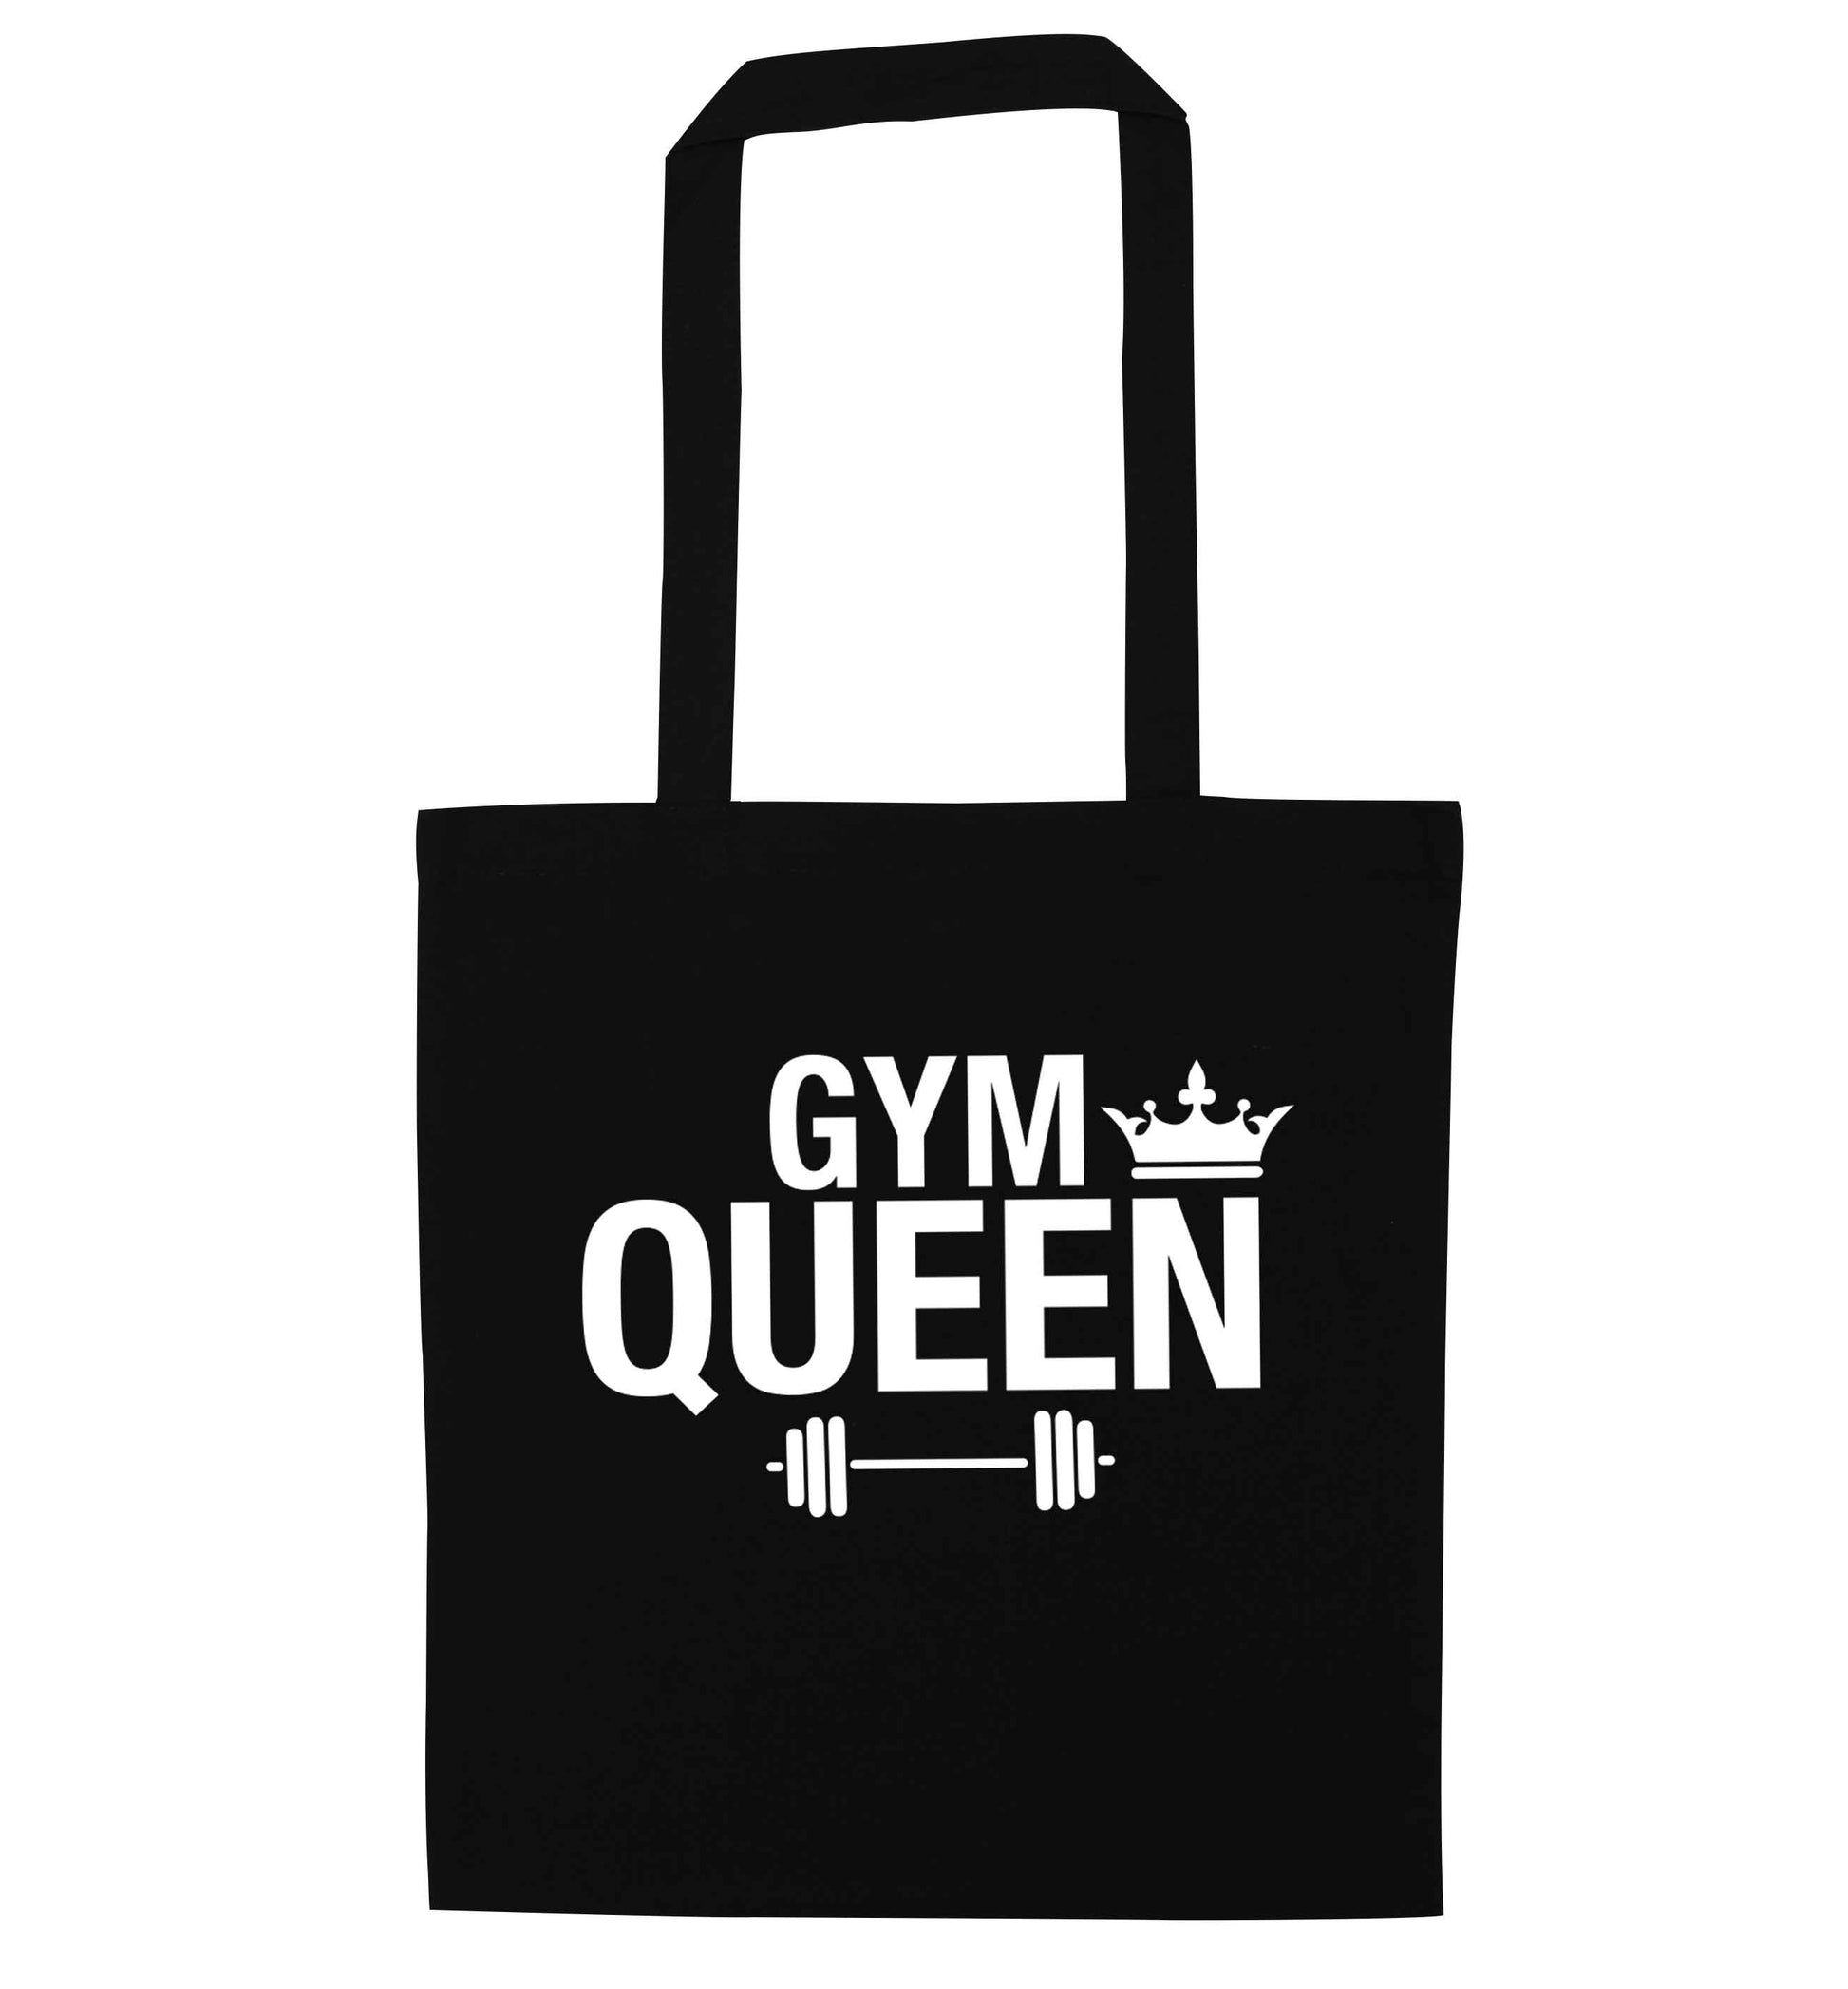 Gym queen black tote bag